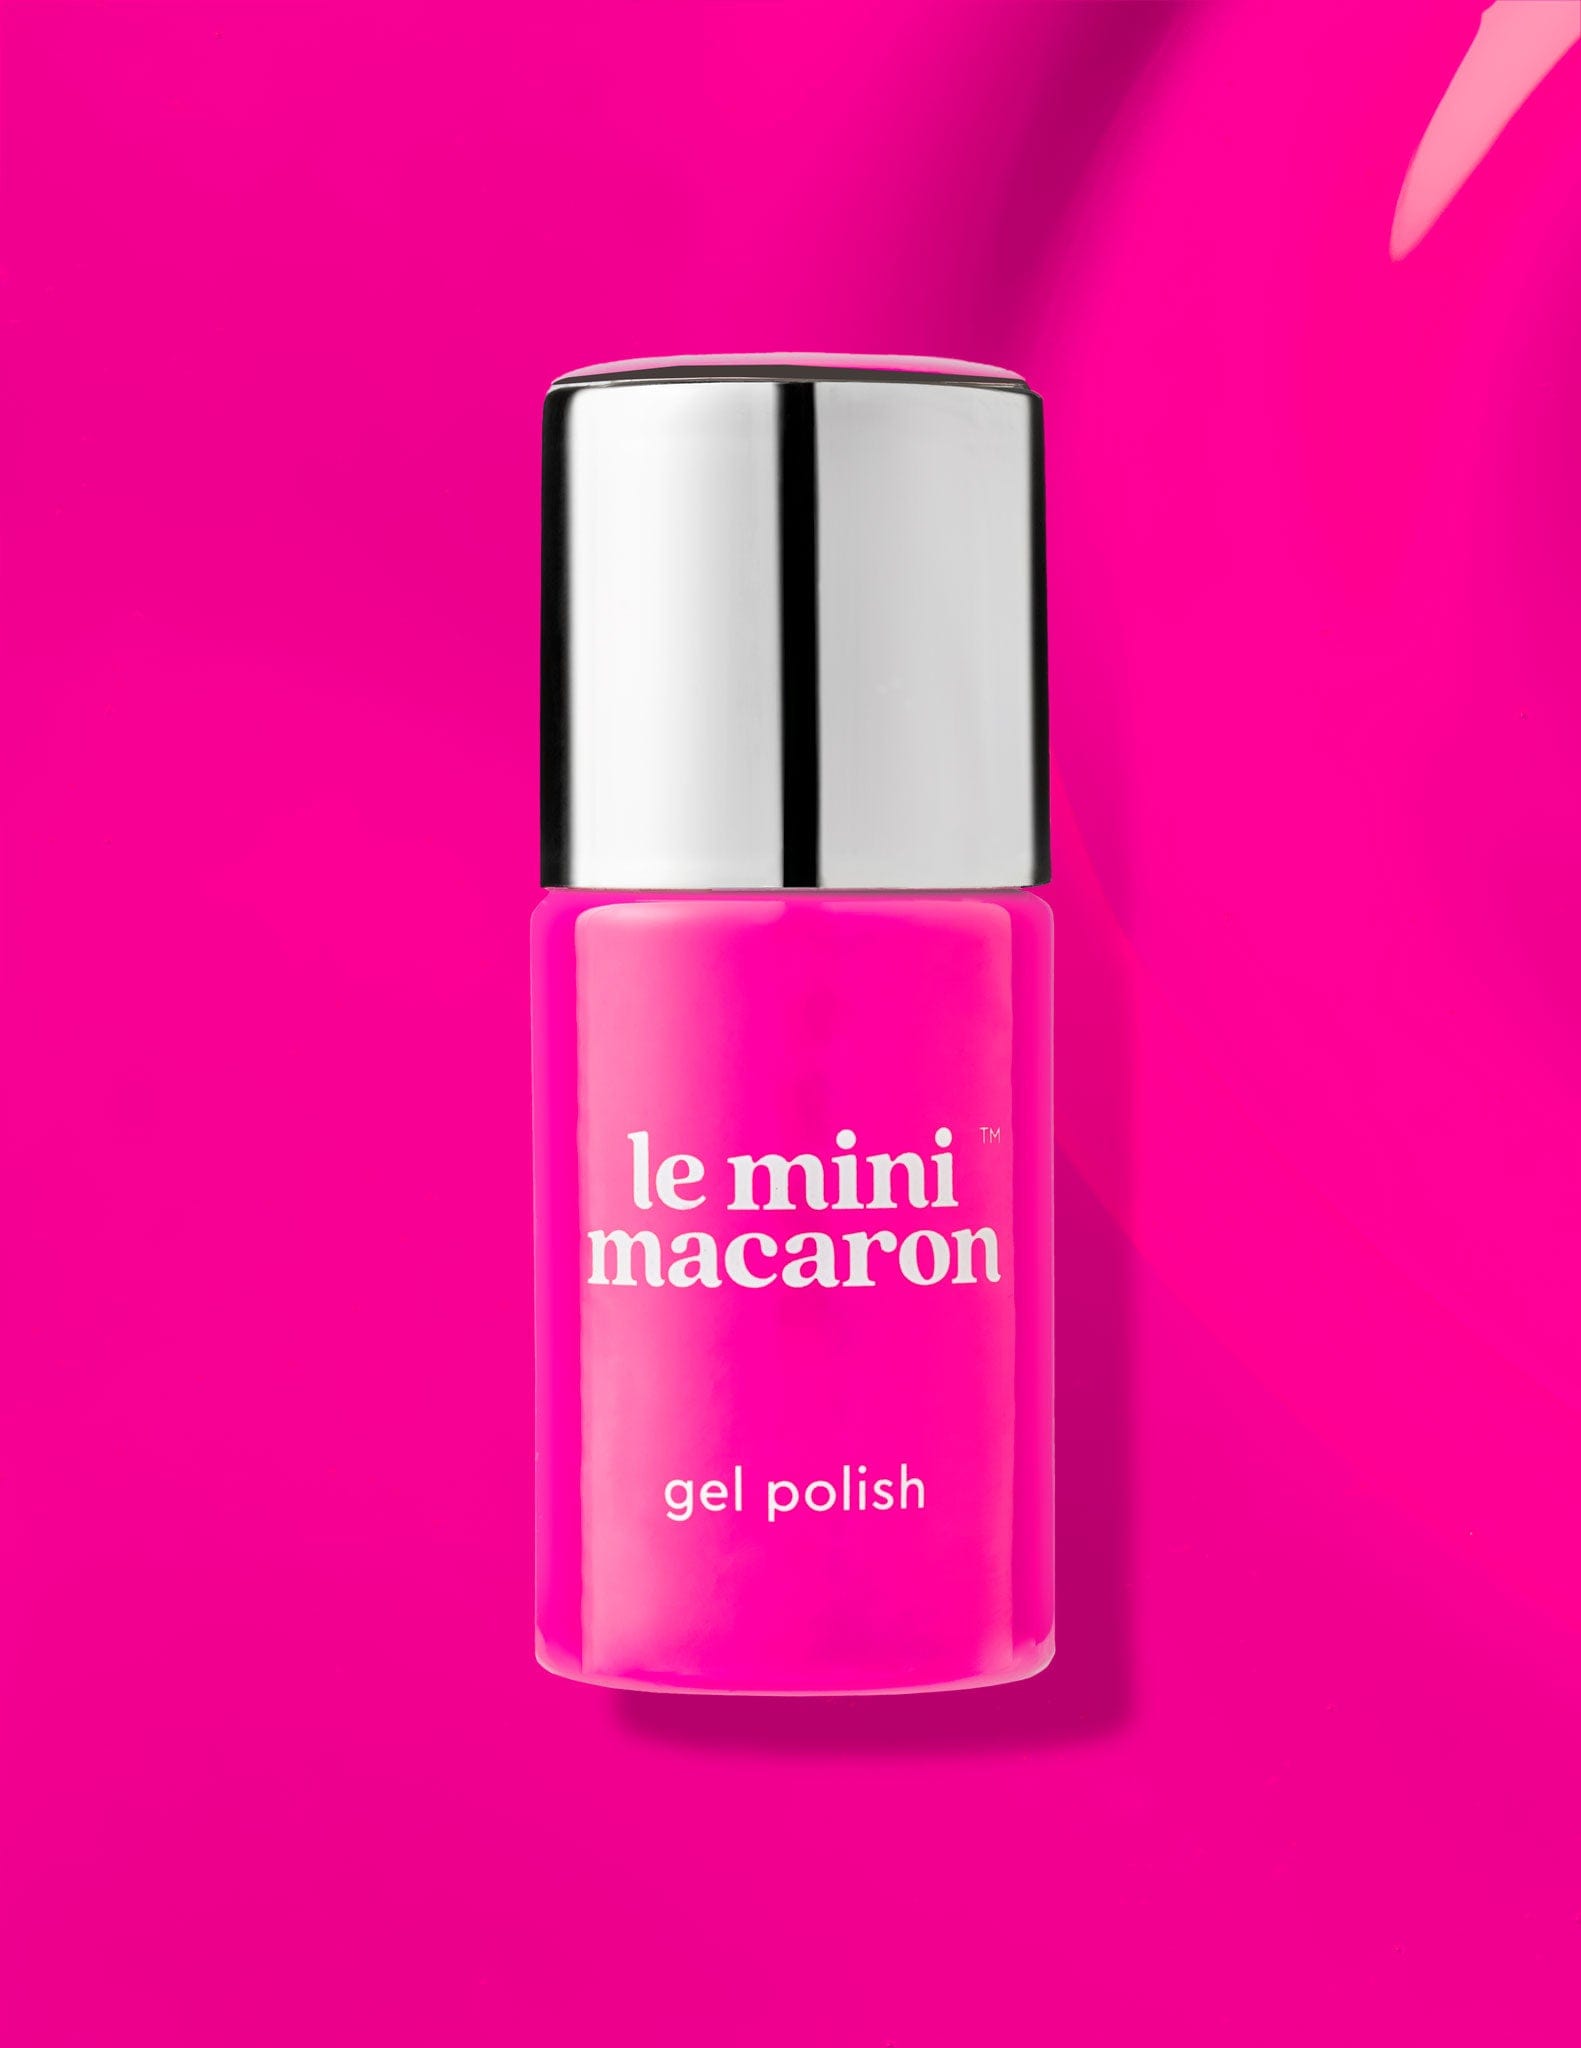 Le-mini-macaron - My Nail Polish Online